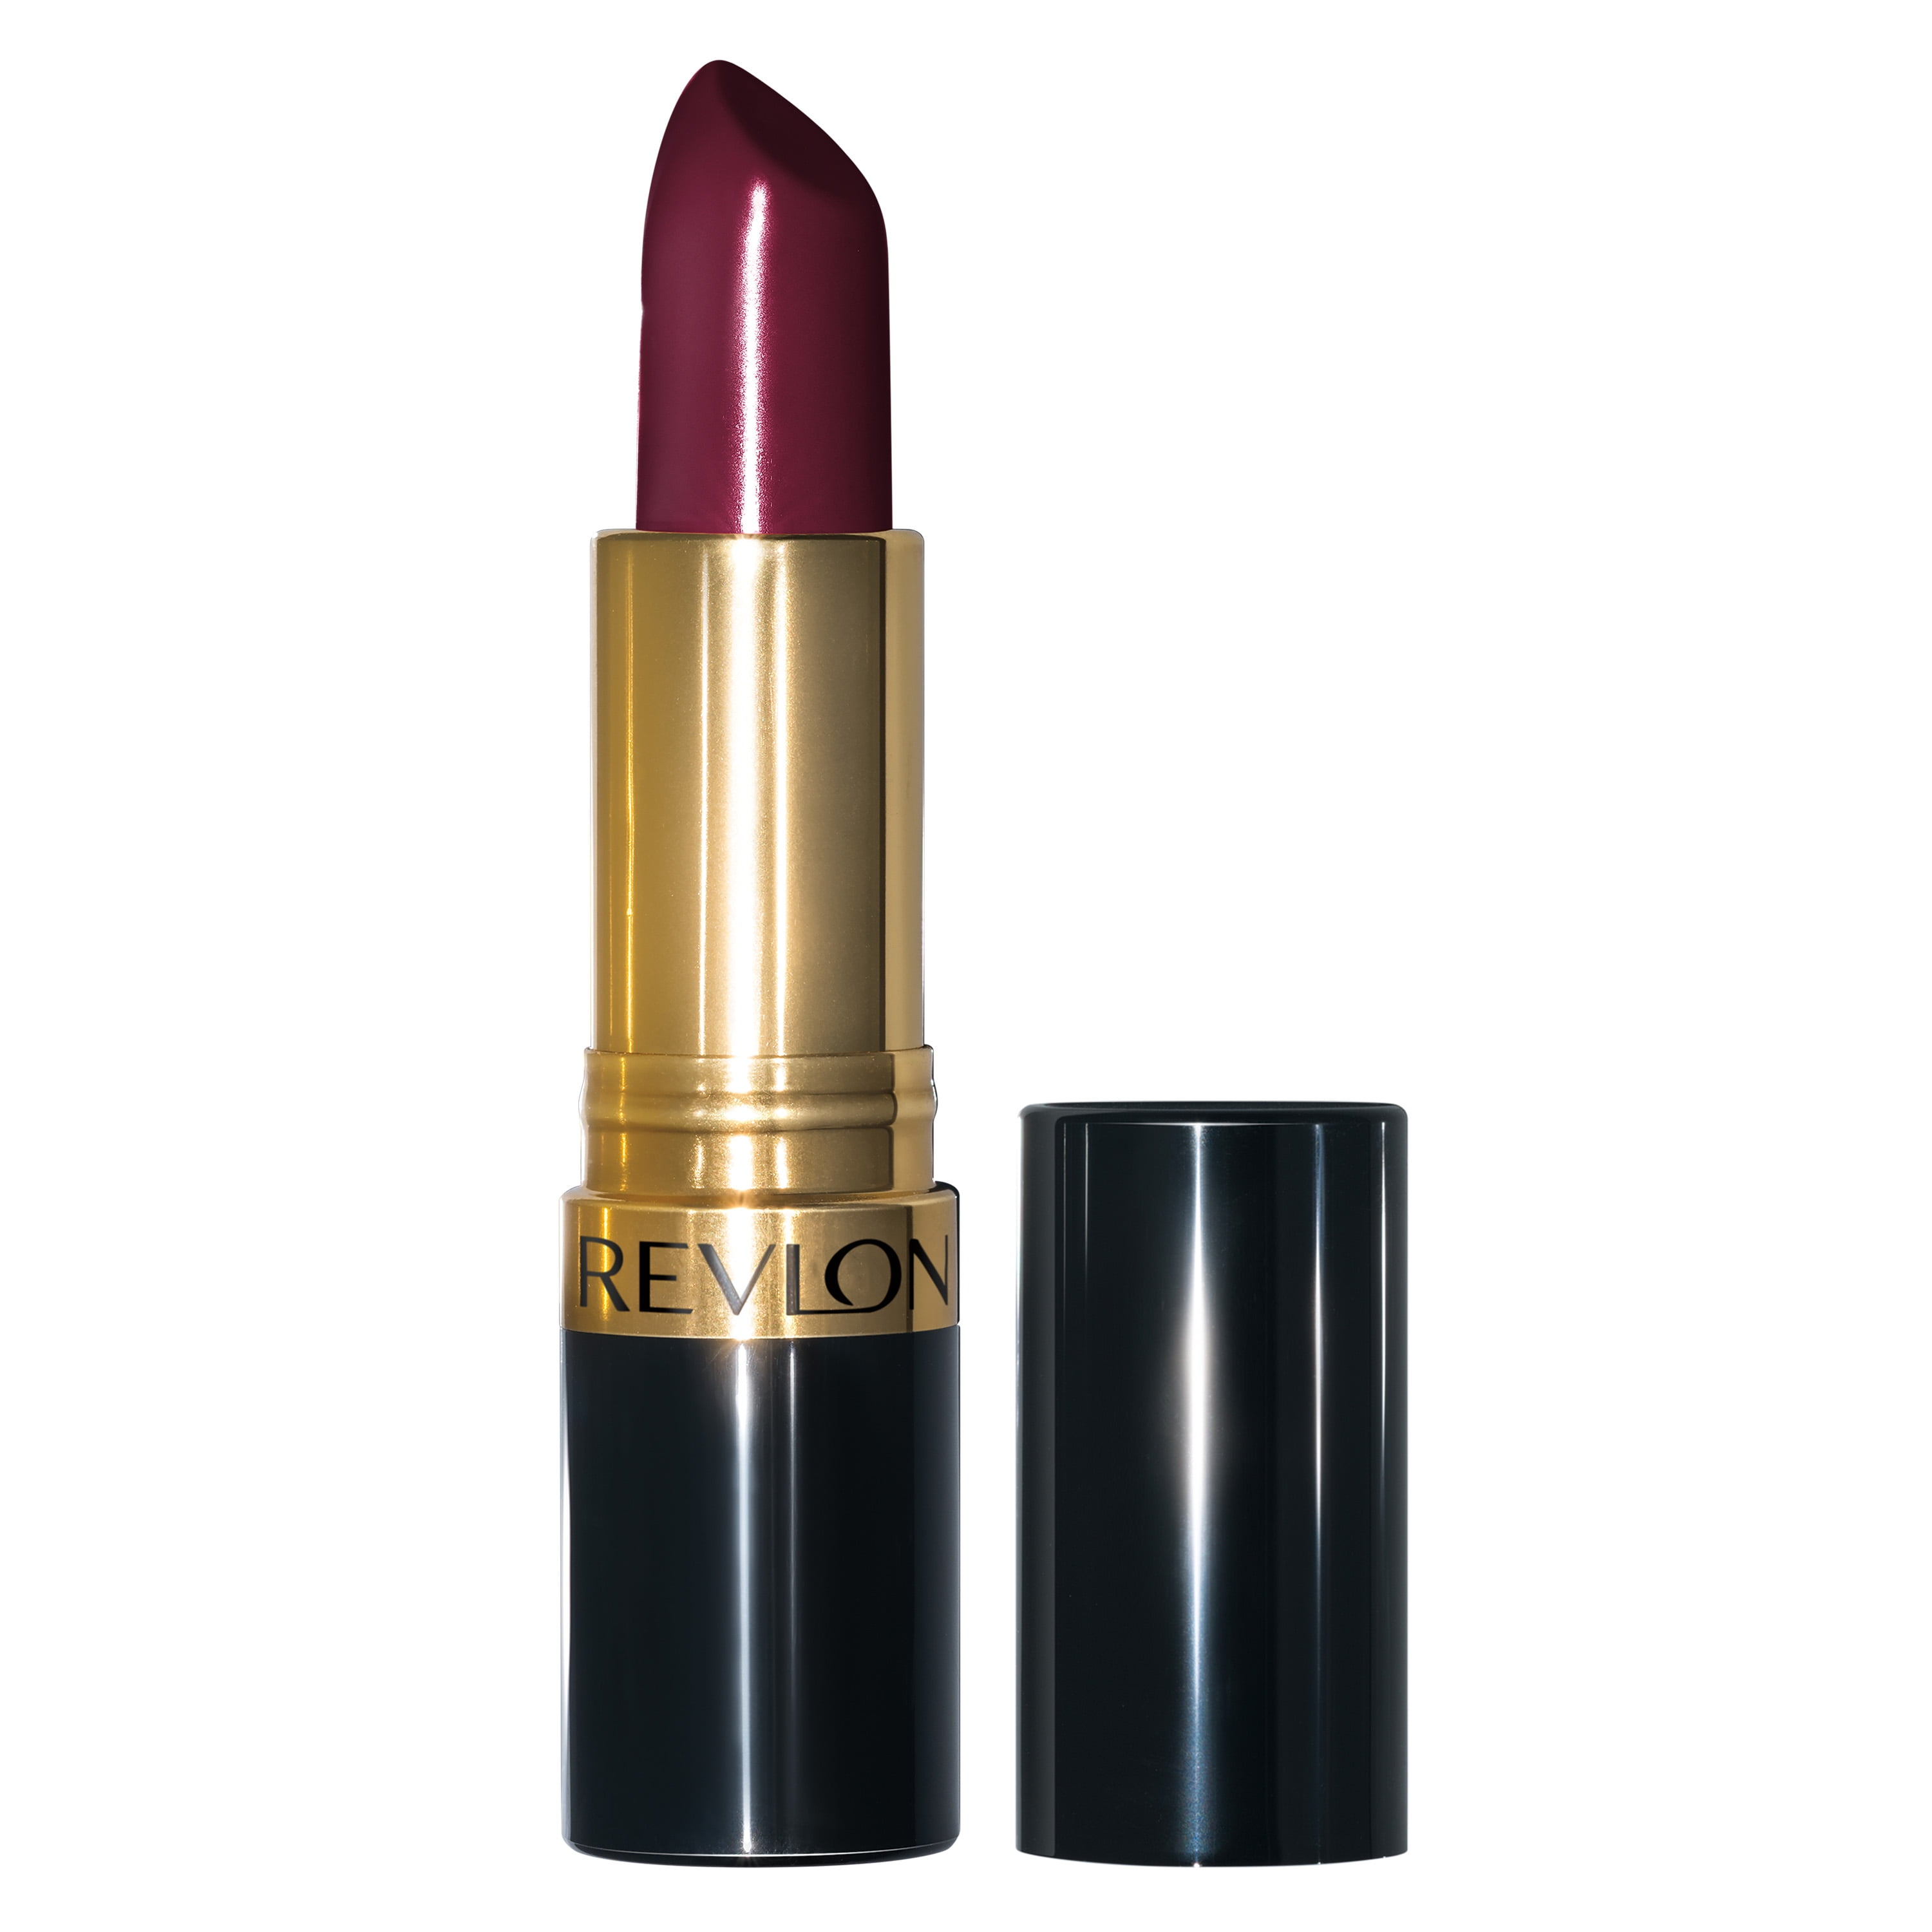 Revlon Super Lustrous Lipstick, Cream Finish, High Impact Lipcolor with Moisturizing Creamy Formula, Infused with Vitamin E and Avocado Oil, 477 Black Cherry, 0.15 oz